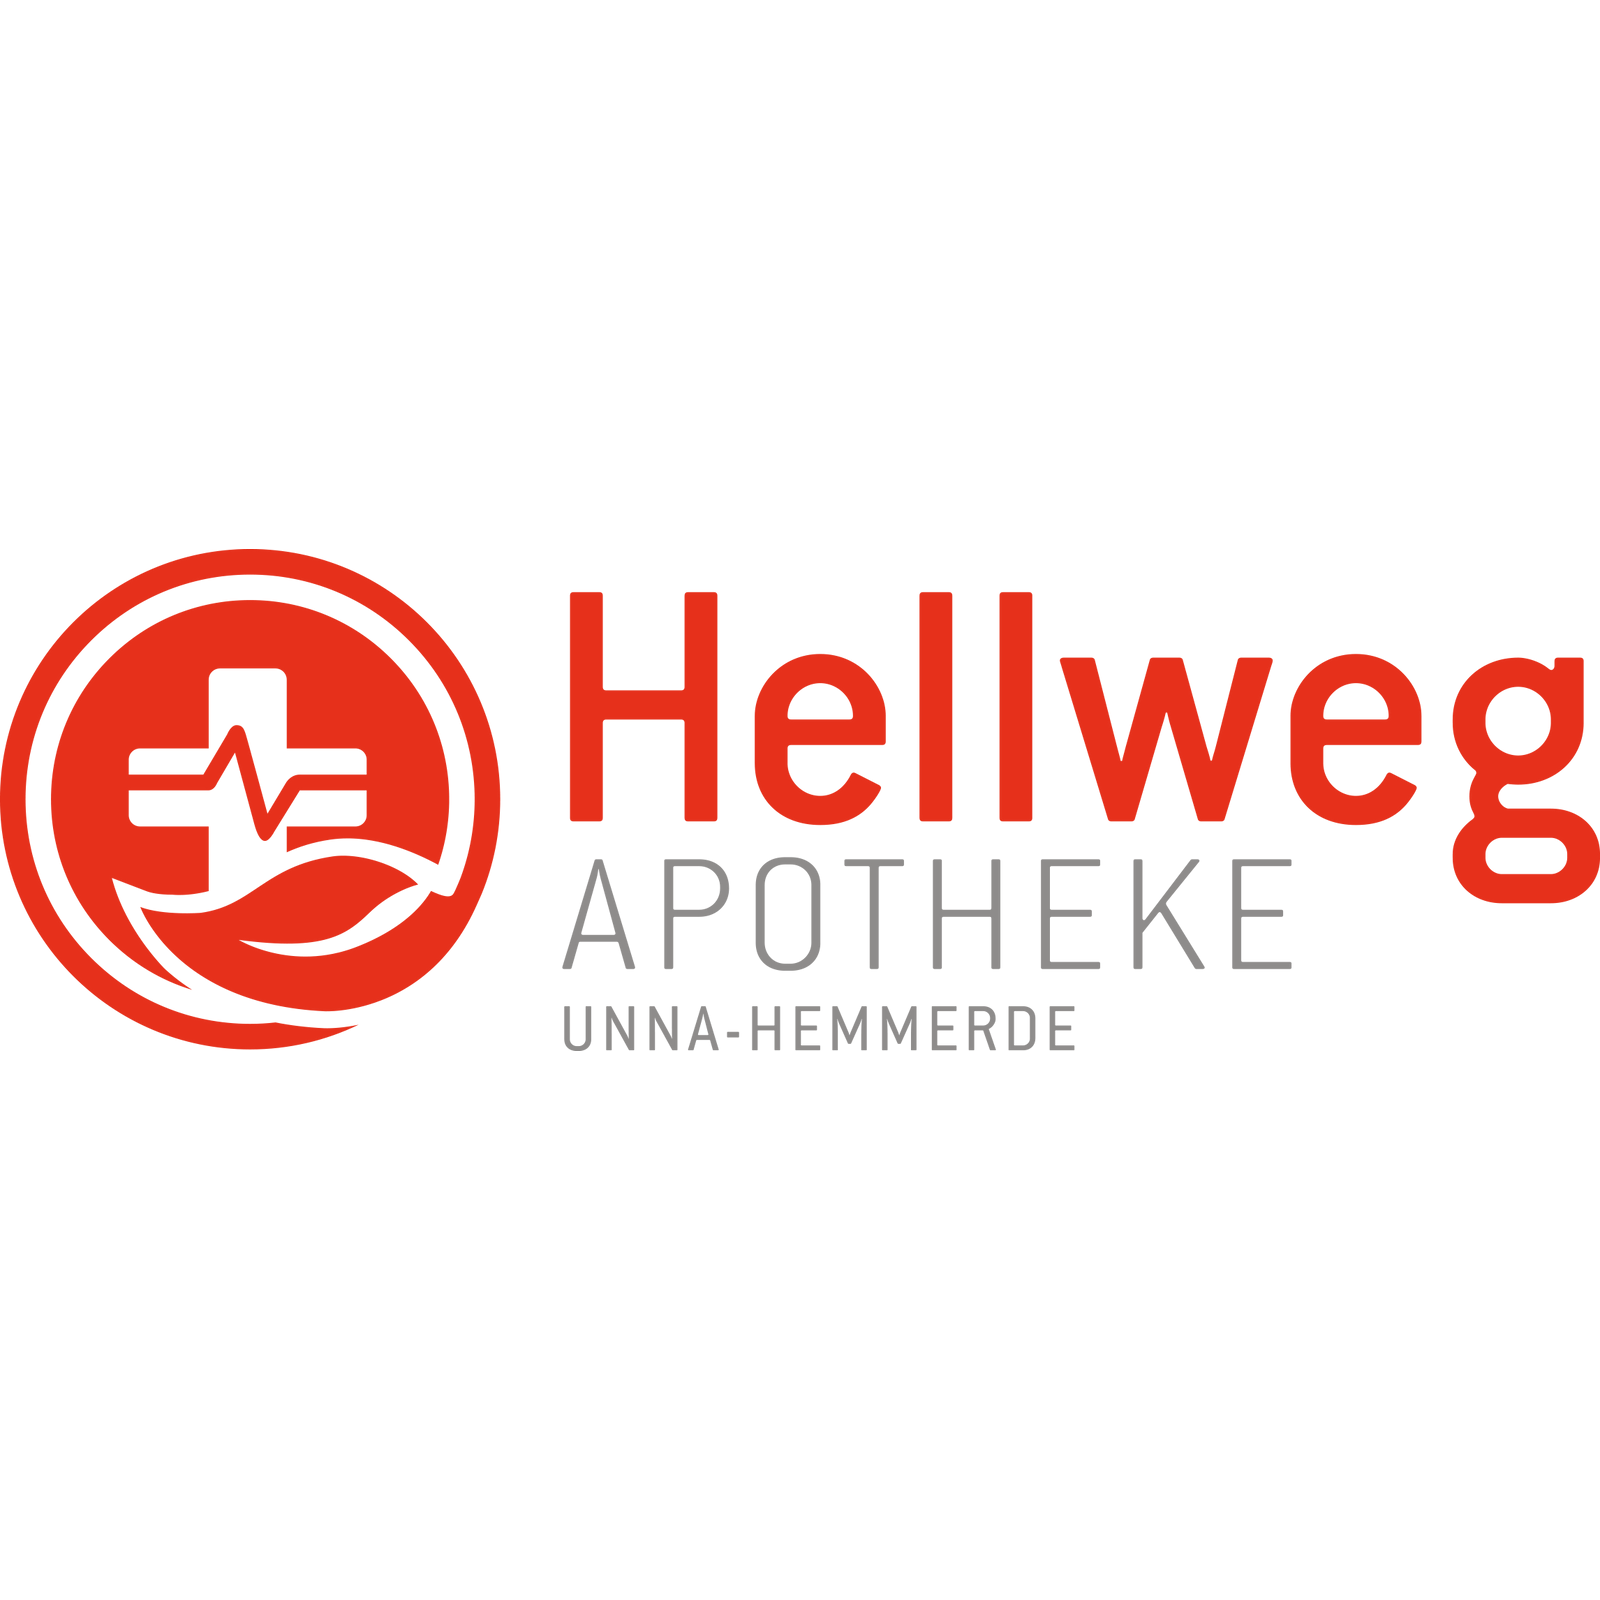 Hellweg-Apotheke in Unna - Logo